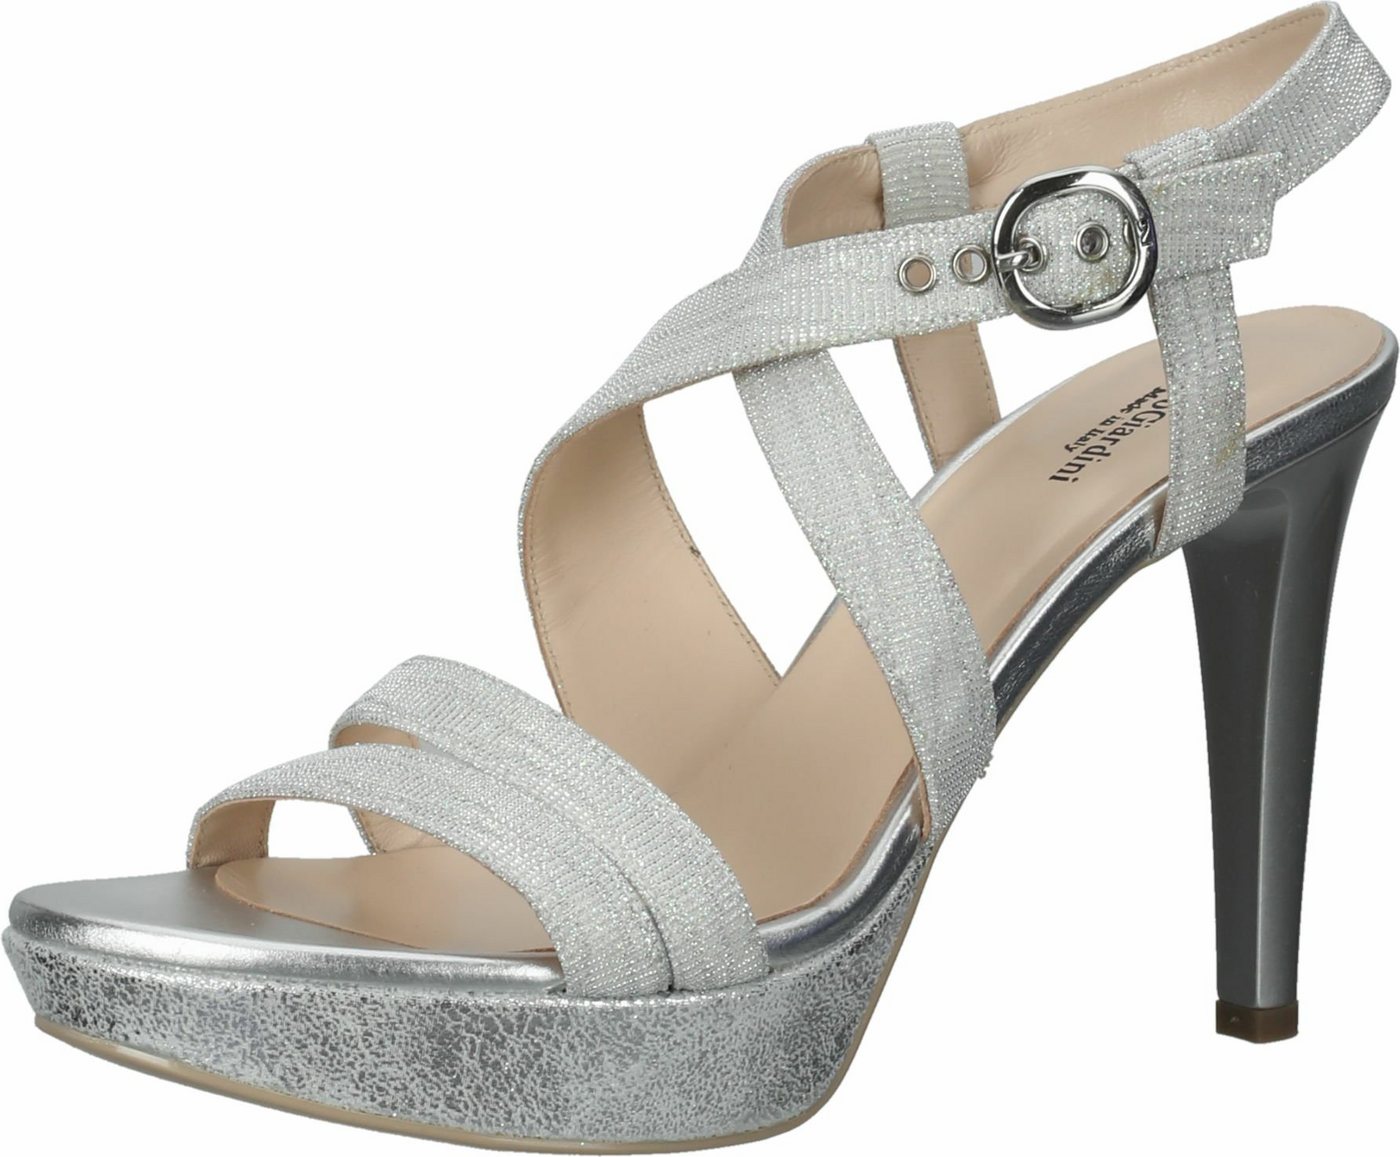 Nero Giardini »Sandalen Textil« High Heel Sandalette › silberfarben  - Onlineshop OTTO